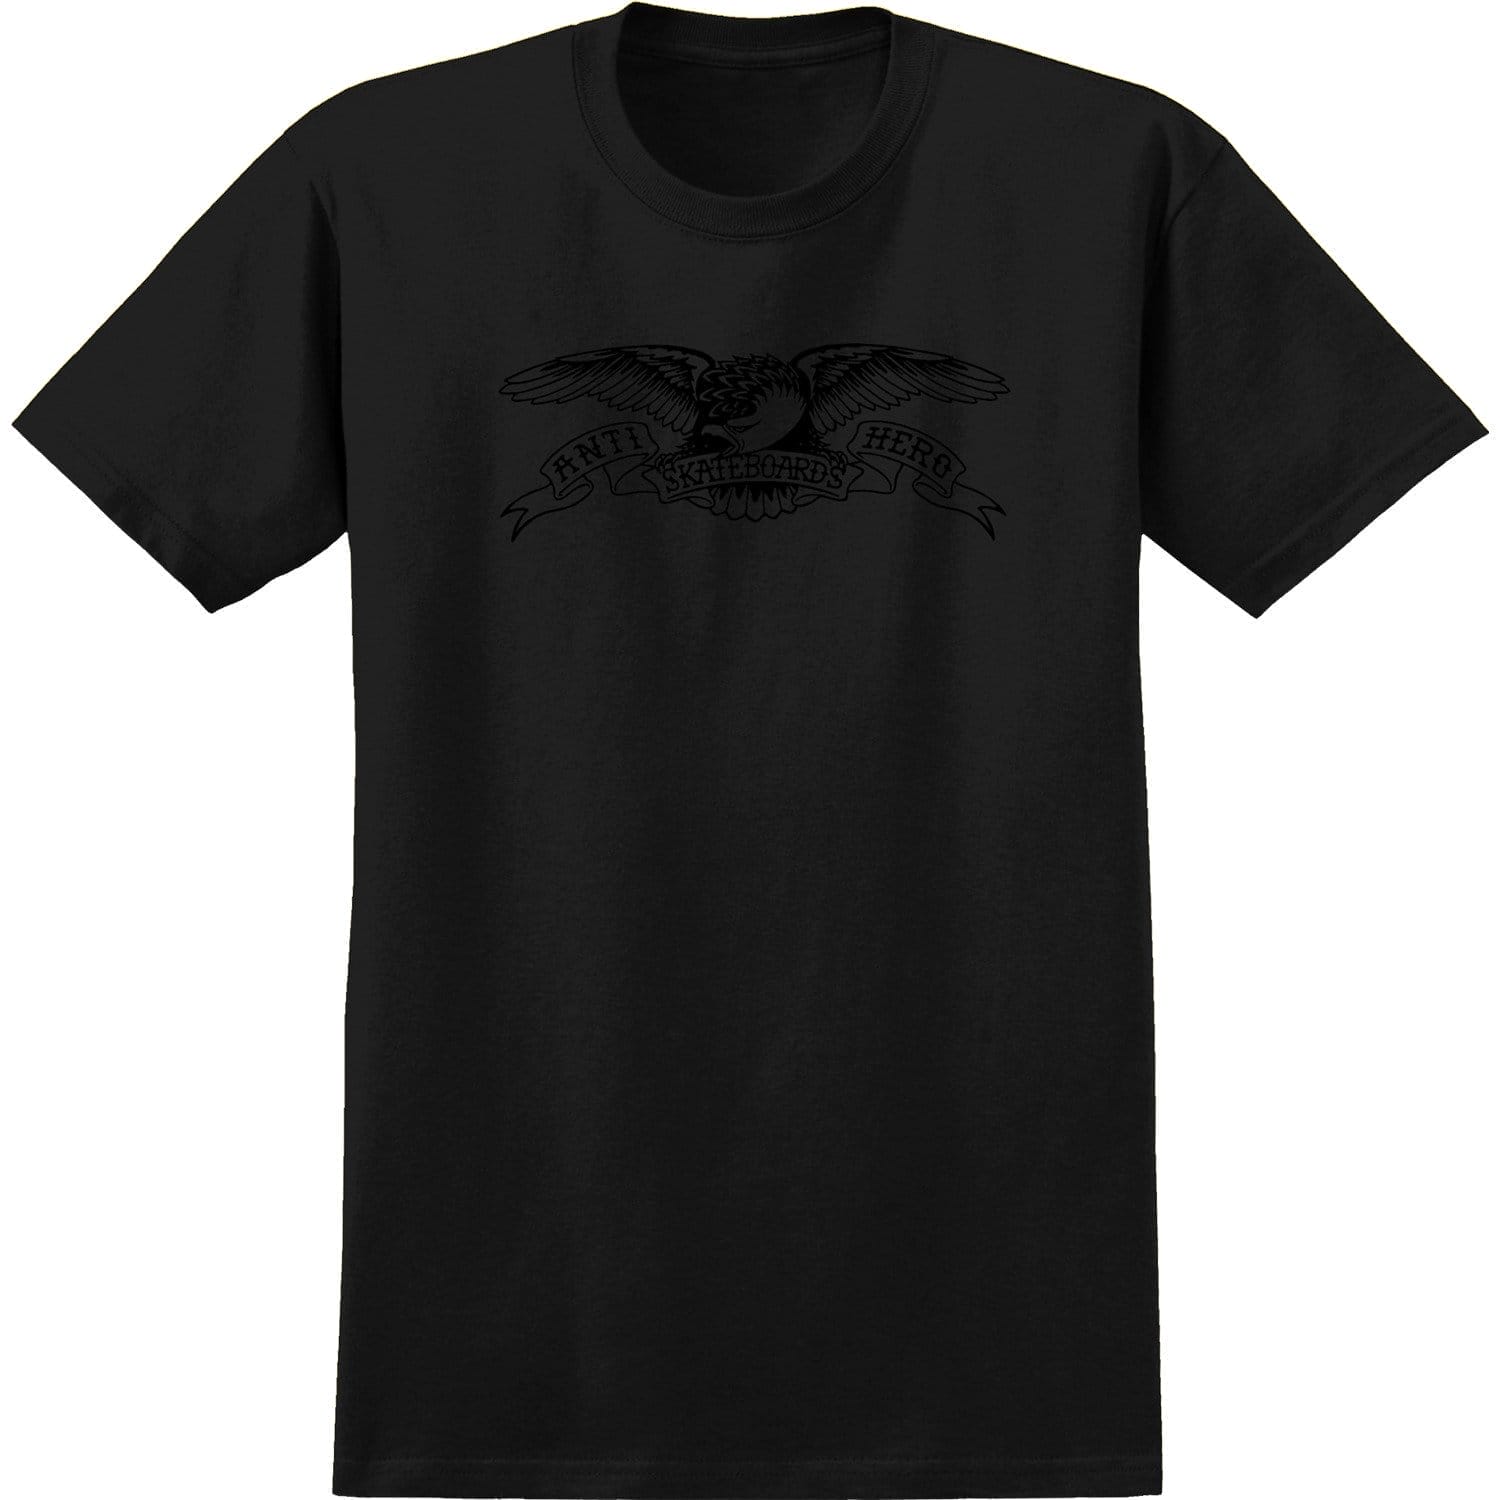 Anti Hero Skateboards Basic Eagle Black / Black Men's Short Sleeve T-Shirt - Medium